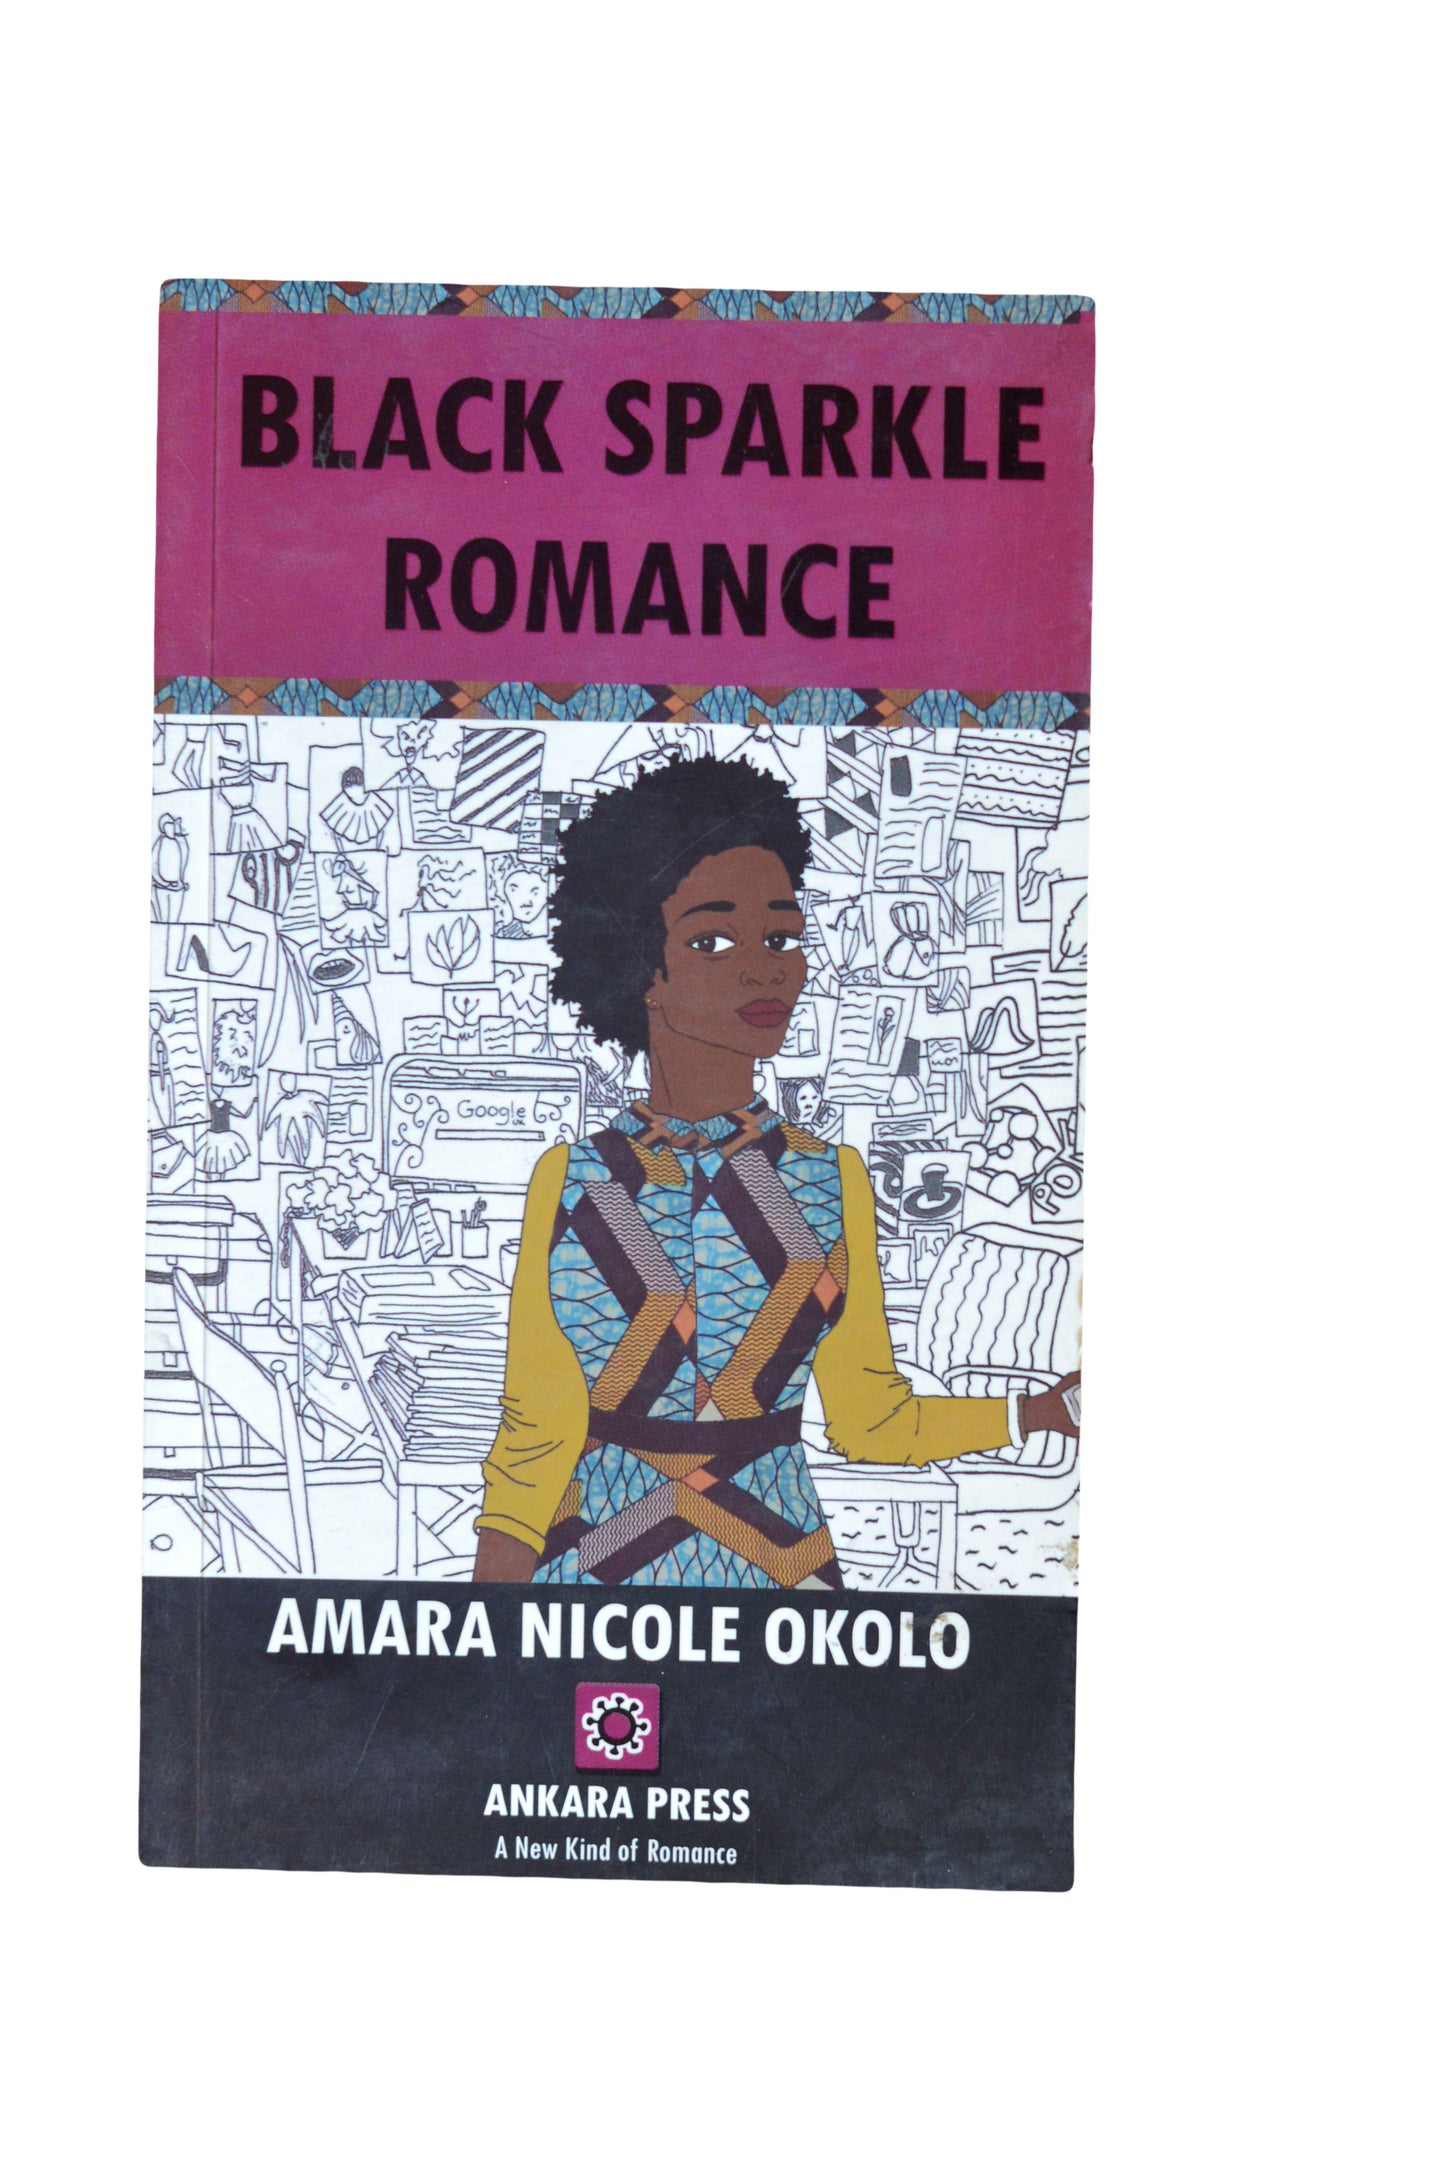 BLACK SPARKLE ROMANCE by Amara Nicole Okolo